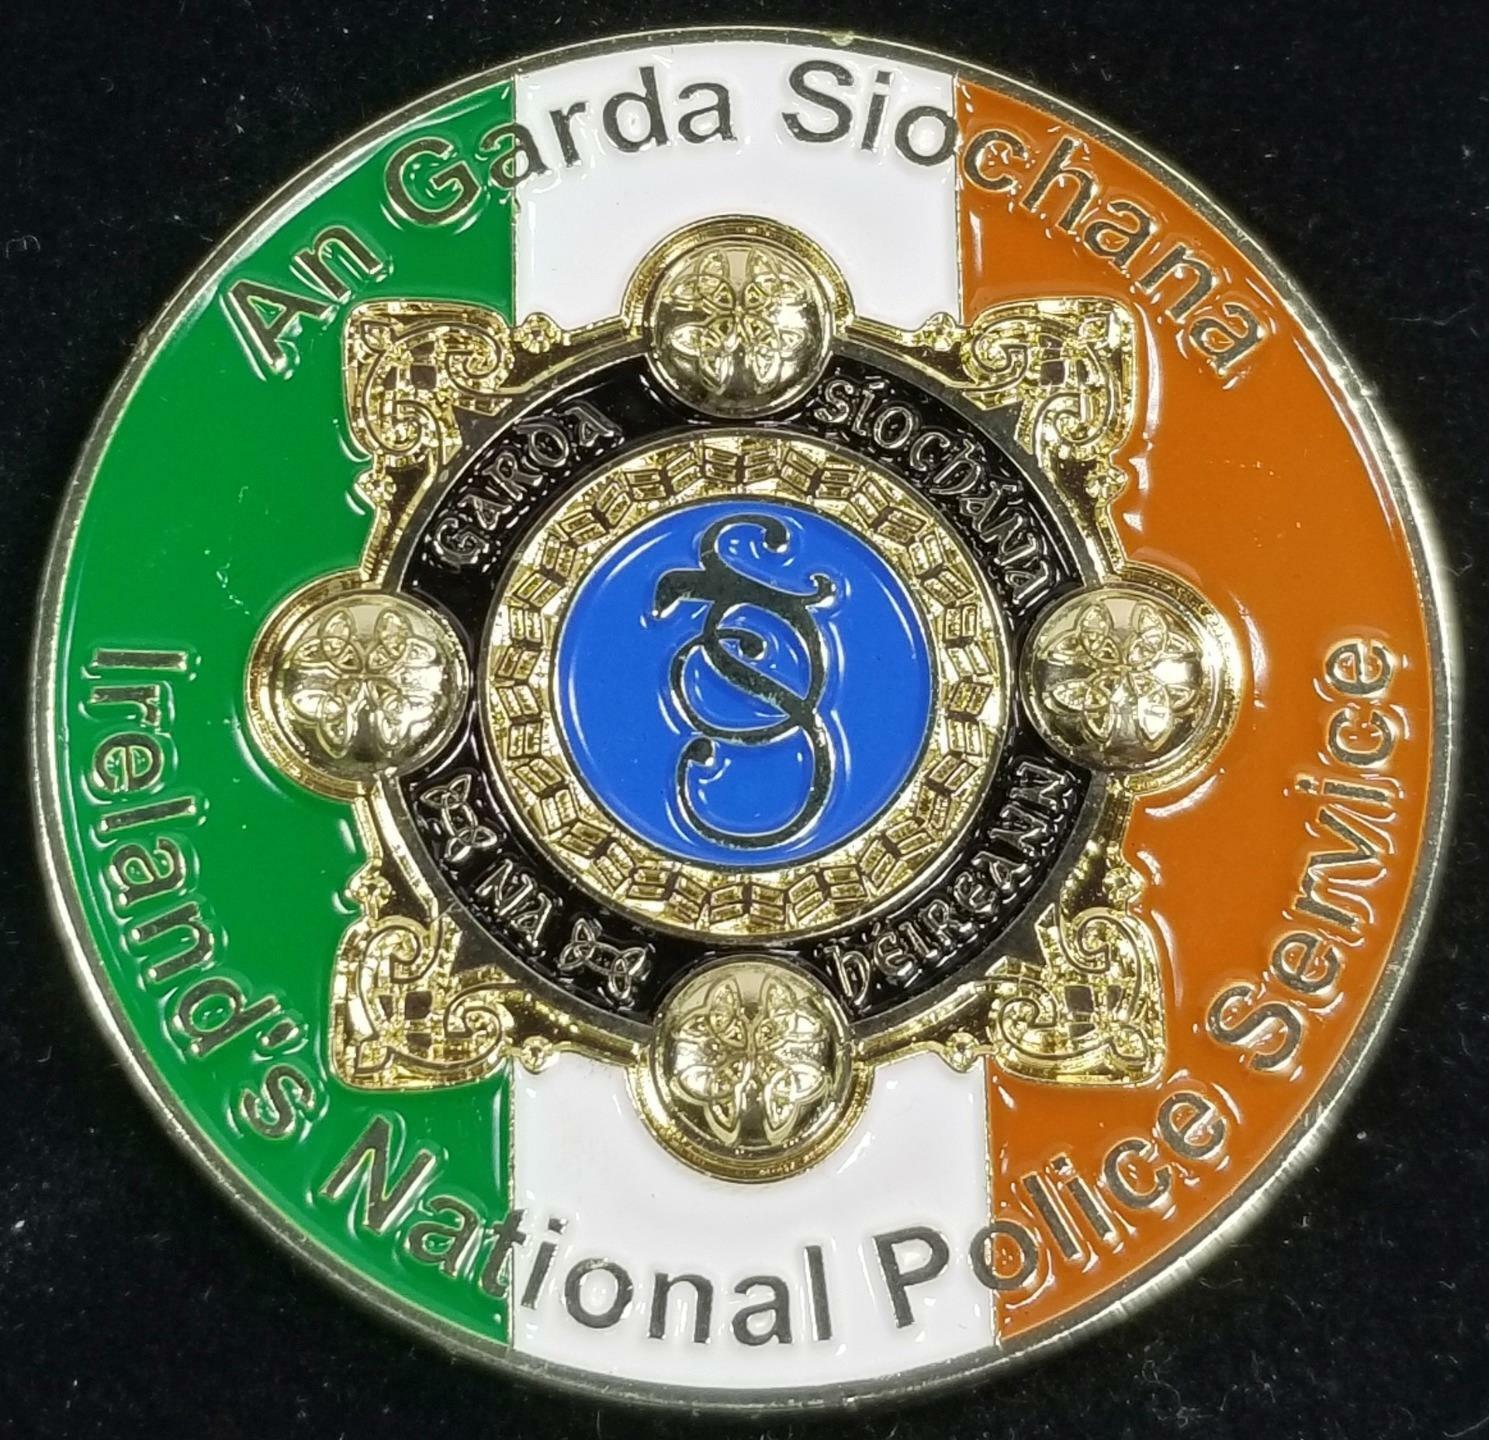 An Garda Siochana Ireland National Police Cork City Division Challenge Coin